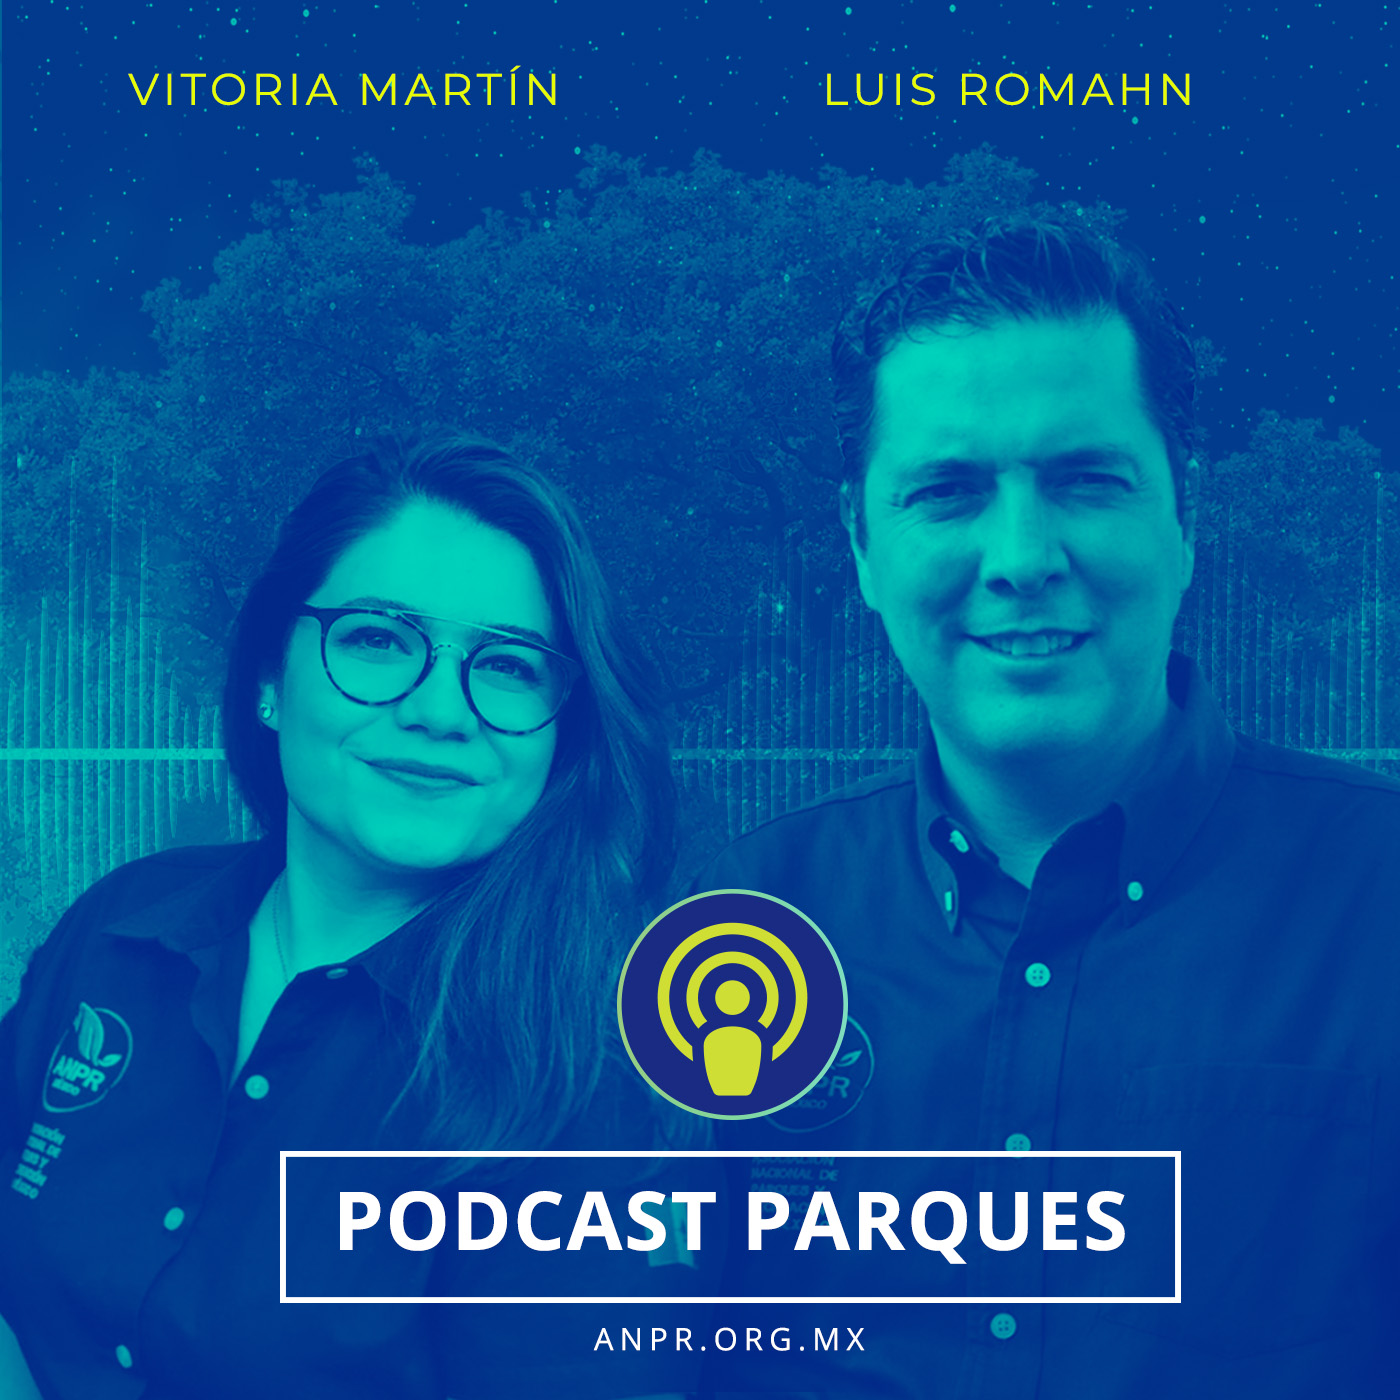 Artwork for podcast Podcast Parques